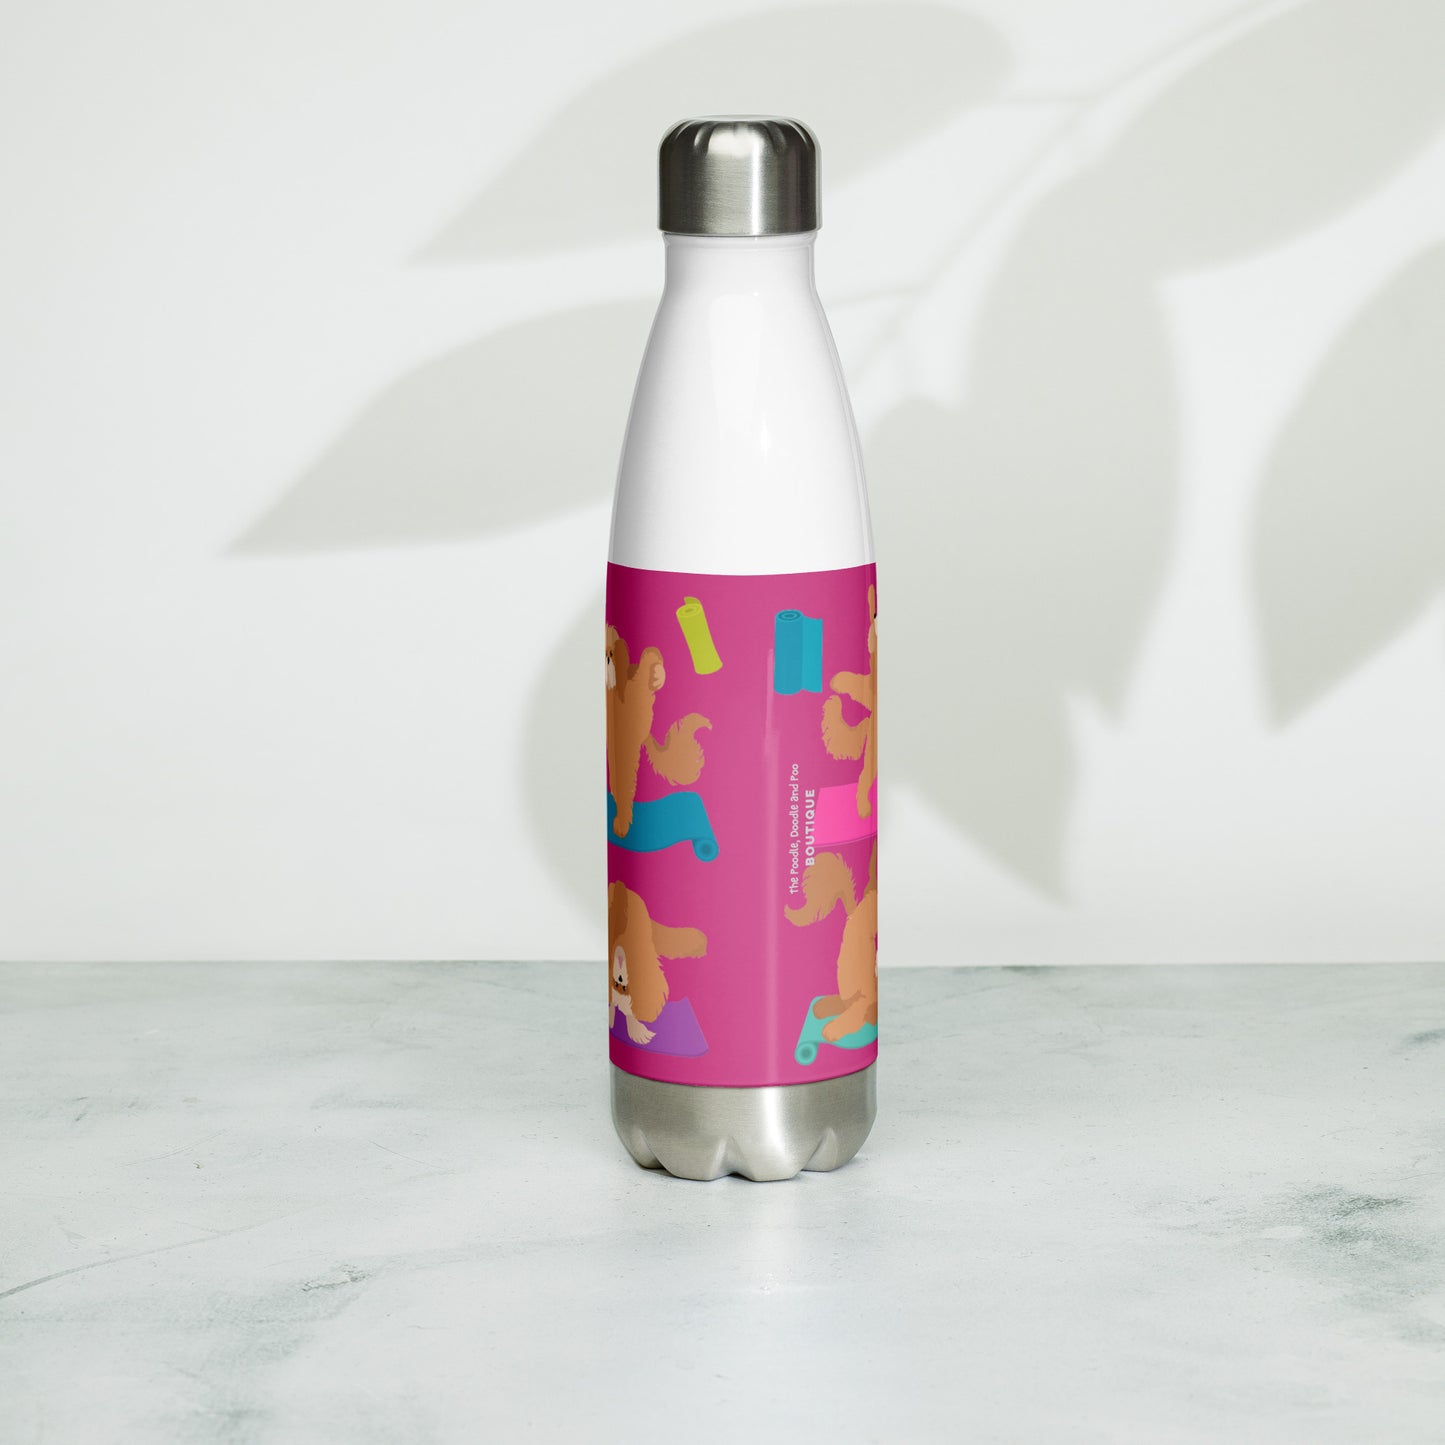 "Yoga Poos" Stainless steel water bottle - pink